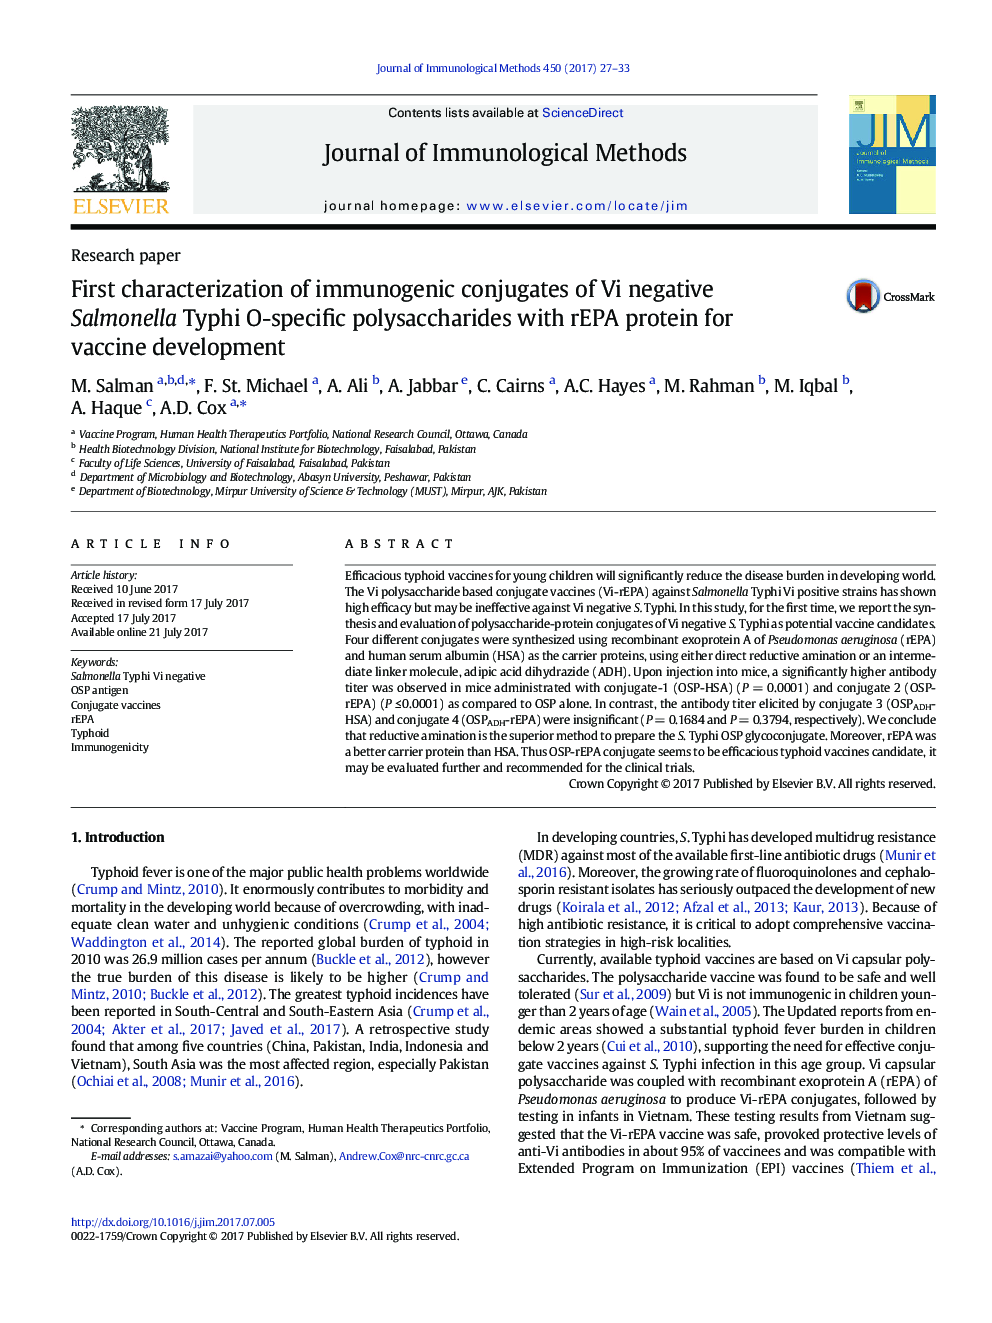 Research paperFirst characterization of immunogenic conjugates of Vi negative Salmonella Typhi O-specific polysaccharides with rEPA protein for vaccine development